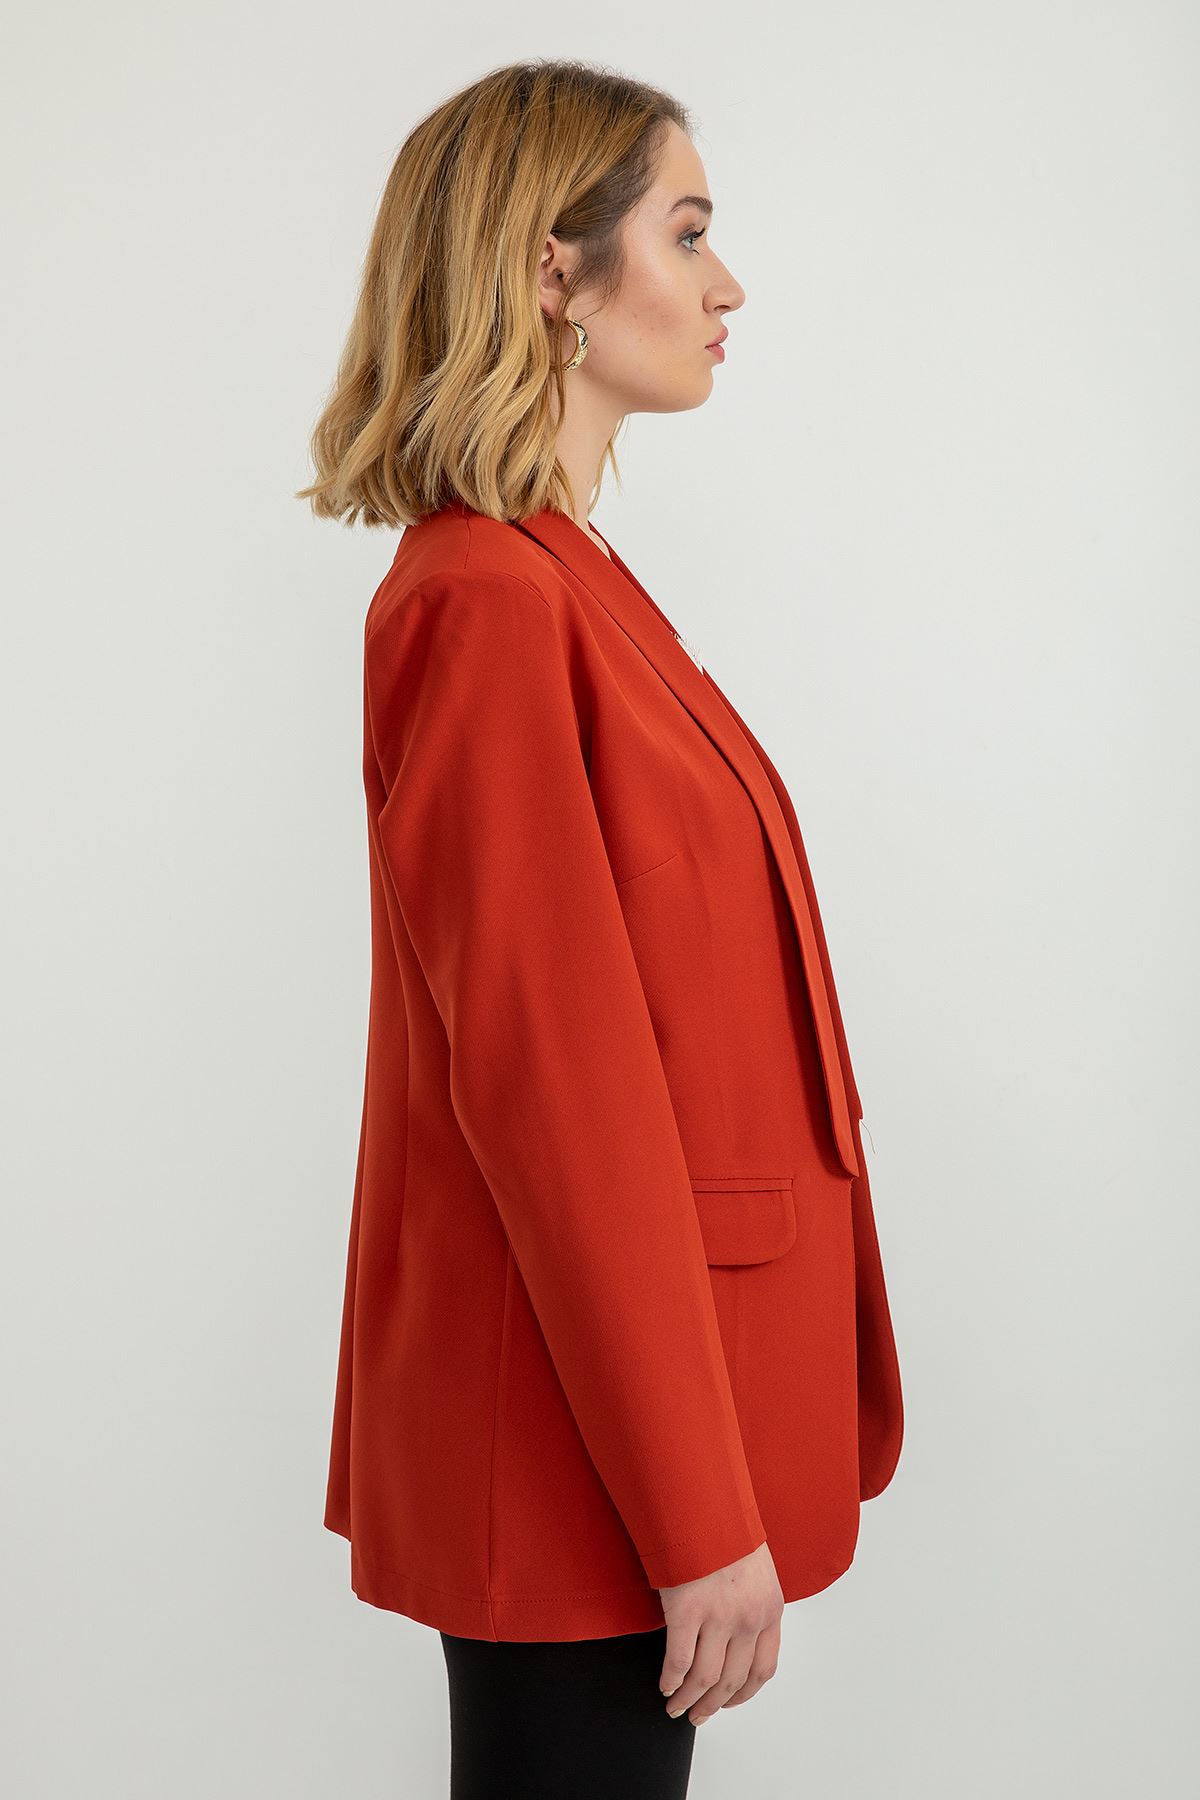 Polyester Fabric Shawl Collar Hip Height Classical Blazer Women Jacket - Brick 